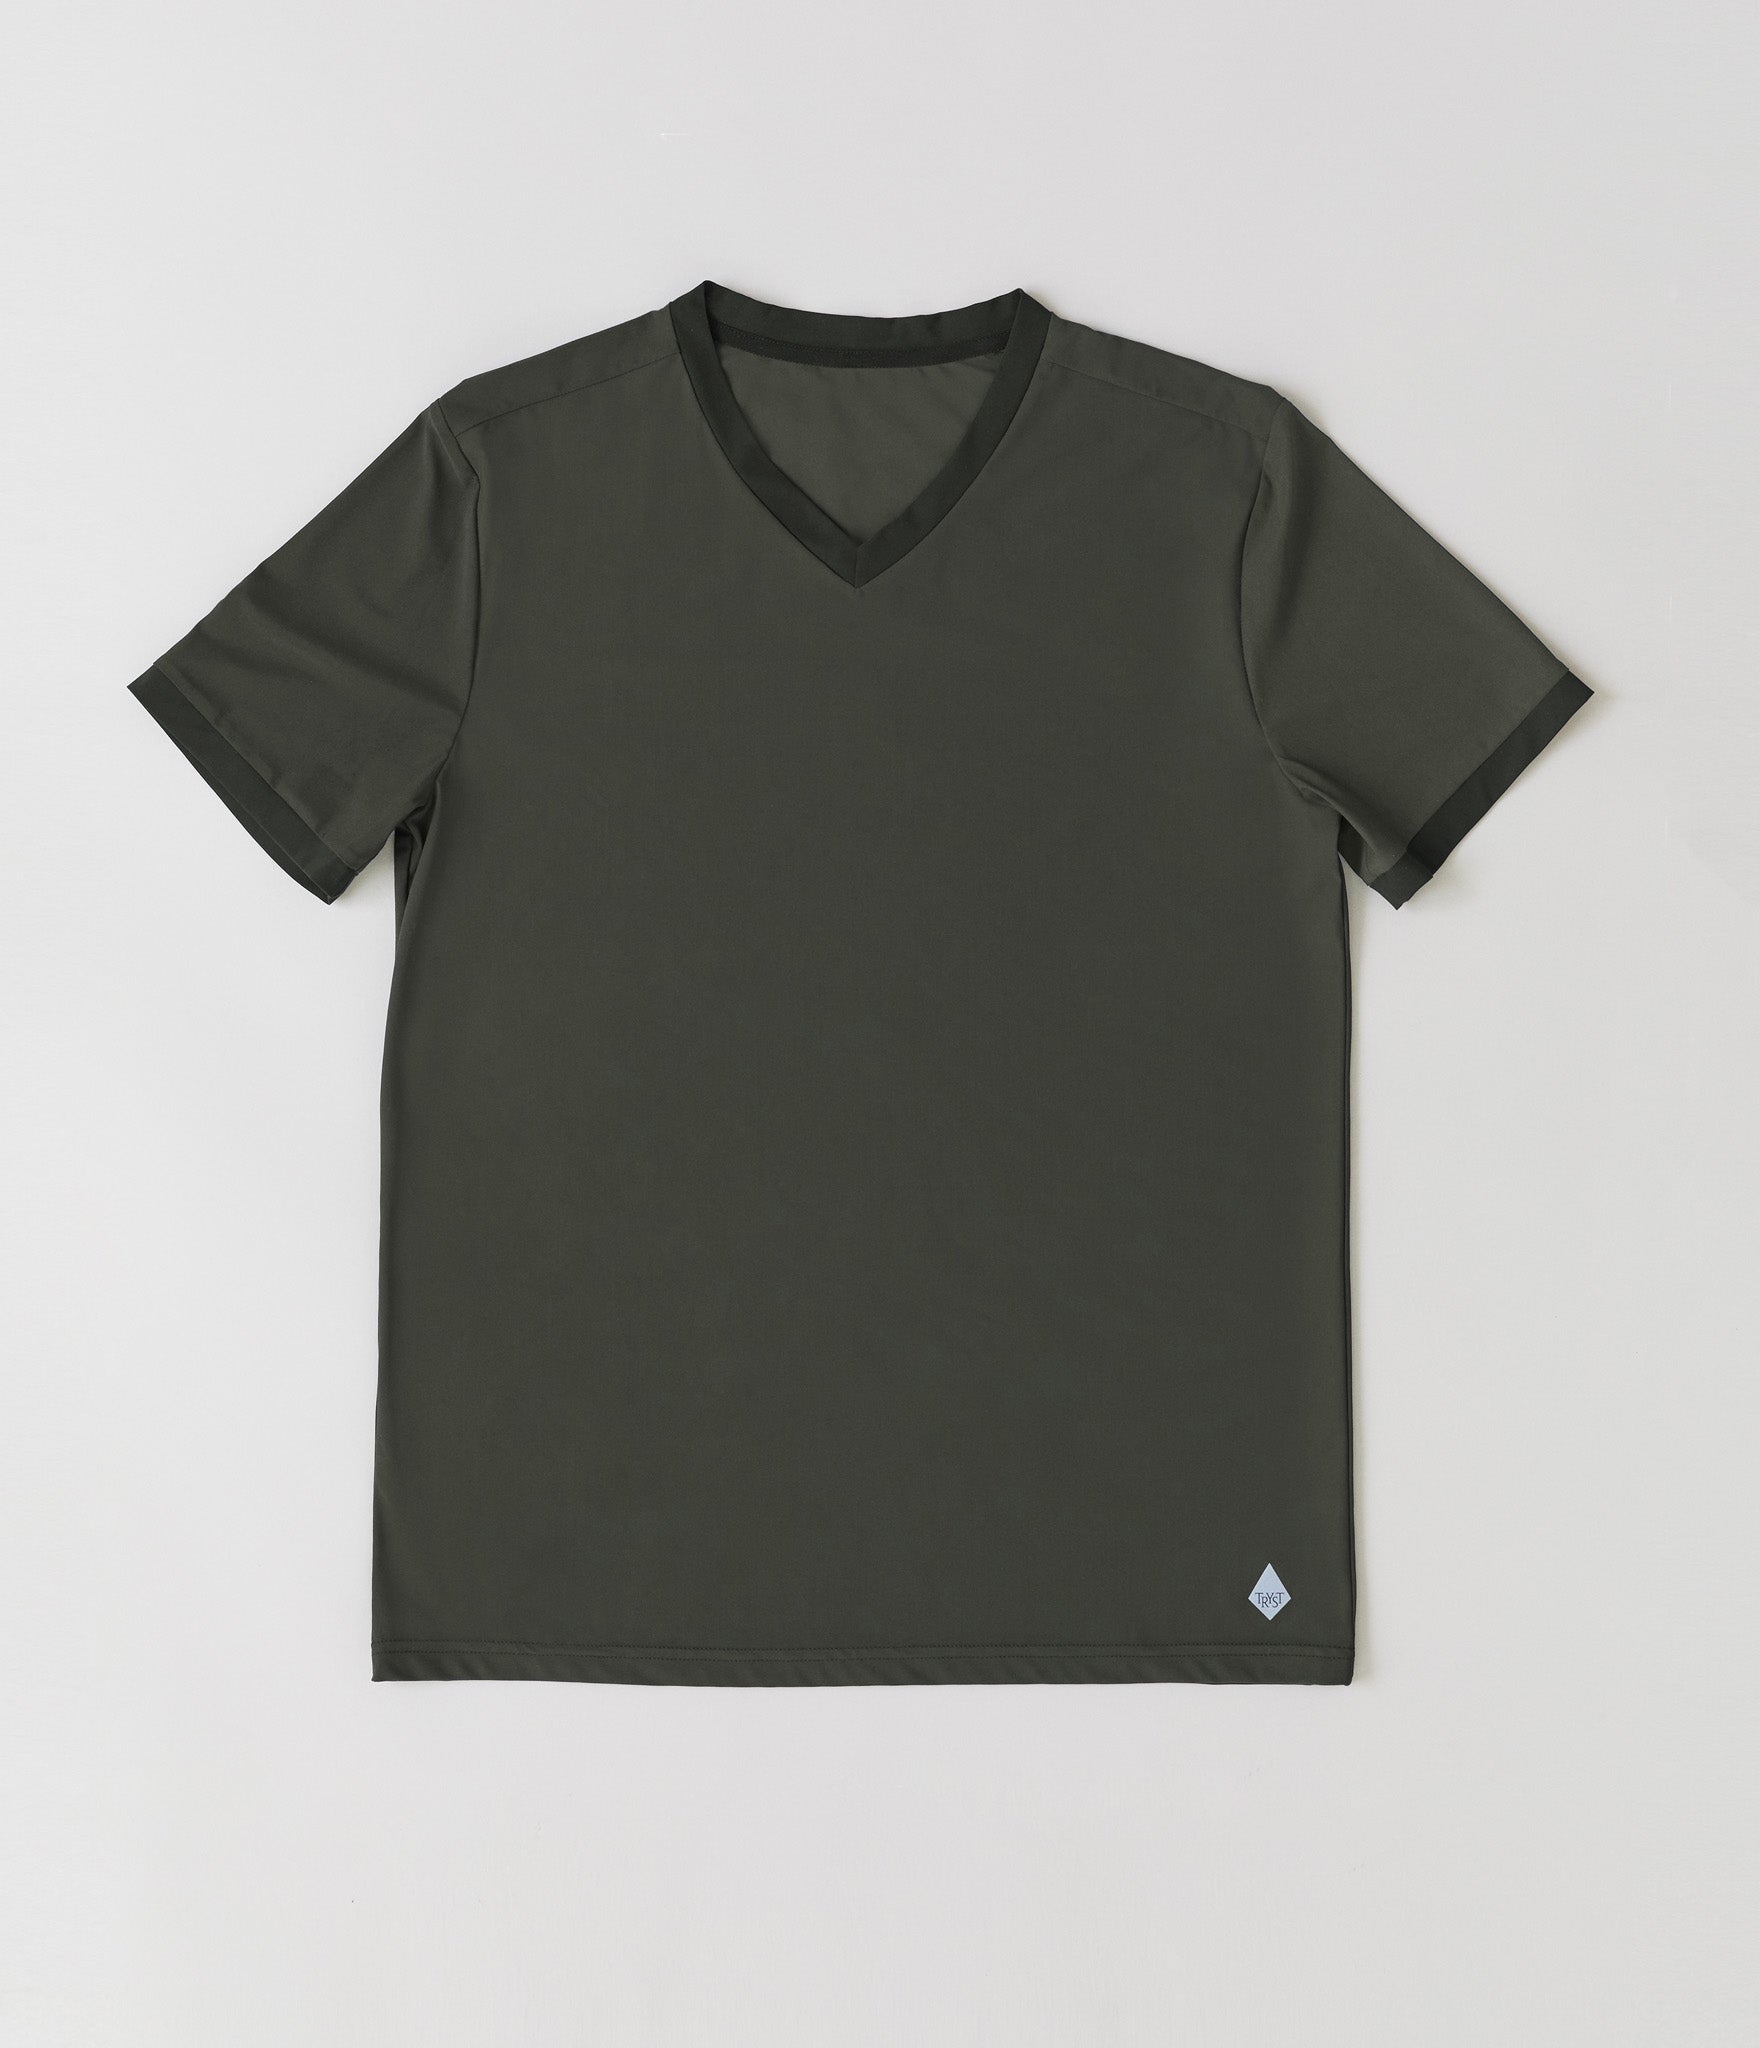 - Monaco Khaki t-shirt Stockholm – Tryst green